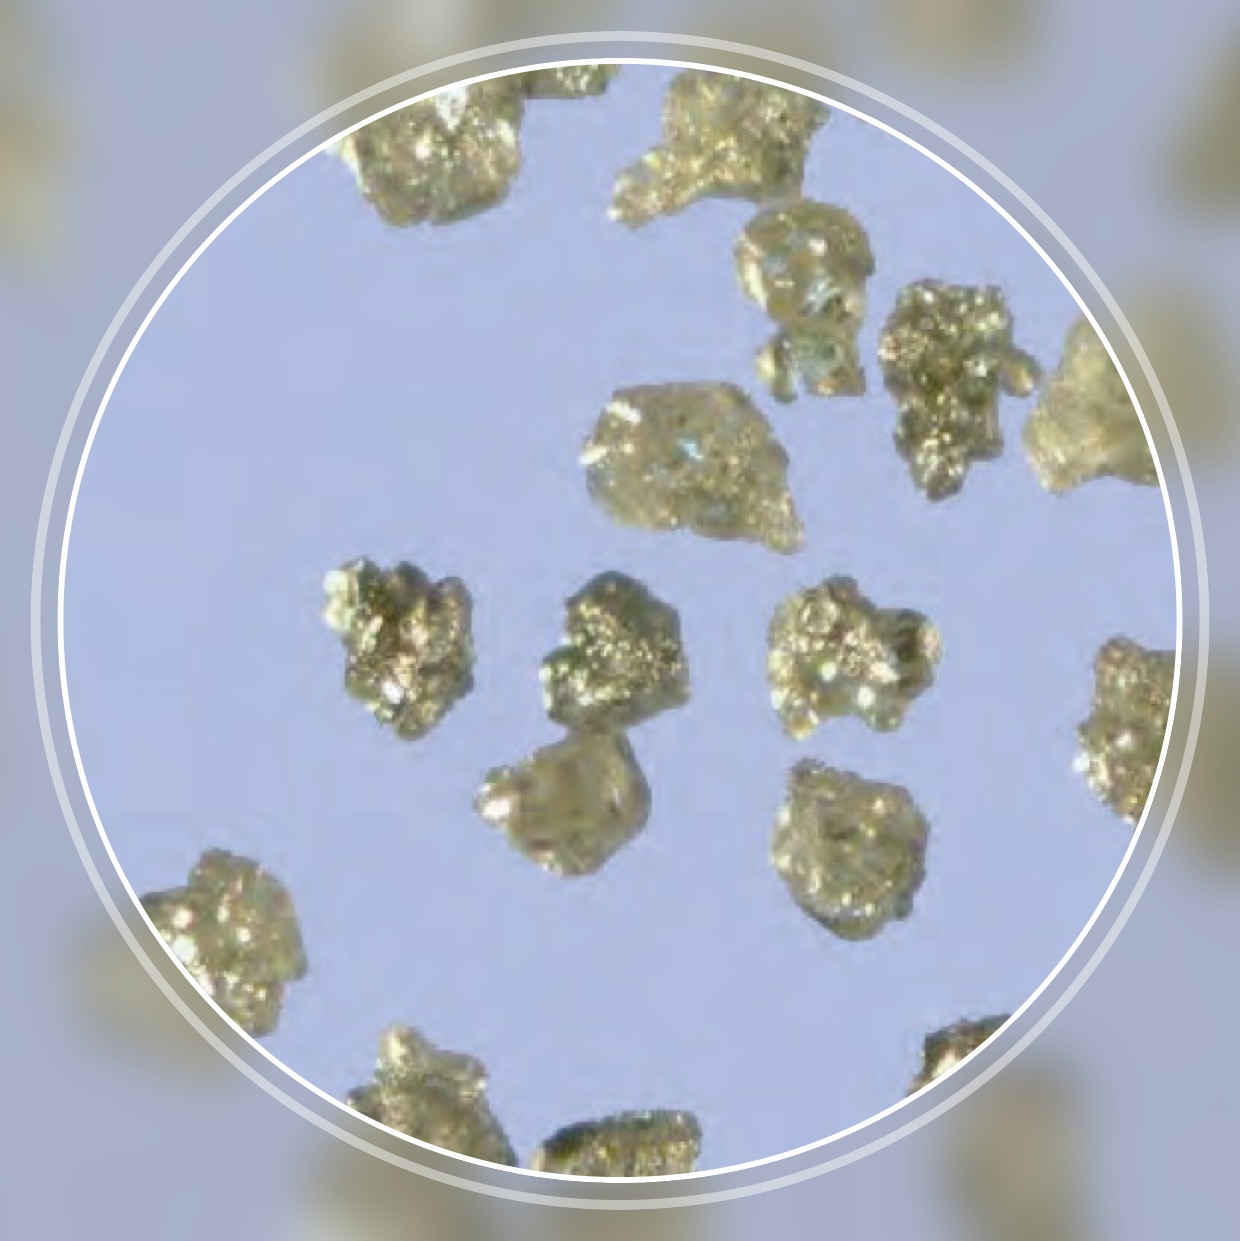 SND-R15 Standaardkwaliteit Blocky Resin Bond-diamant met gemiddelde brosheid Uitgelichte afbeelding